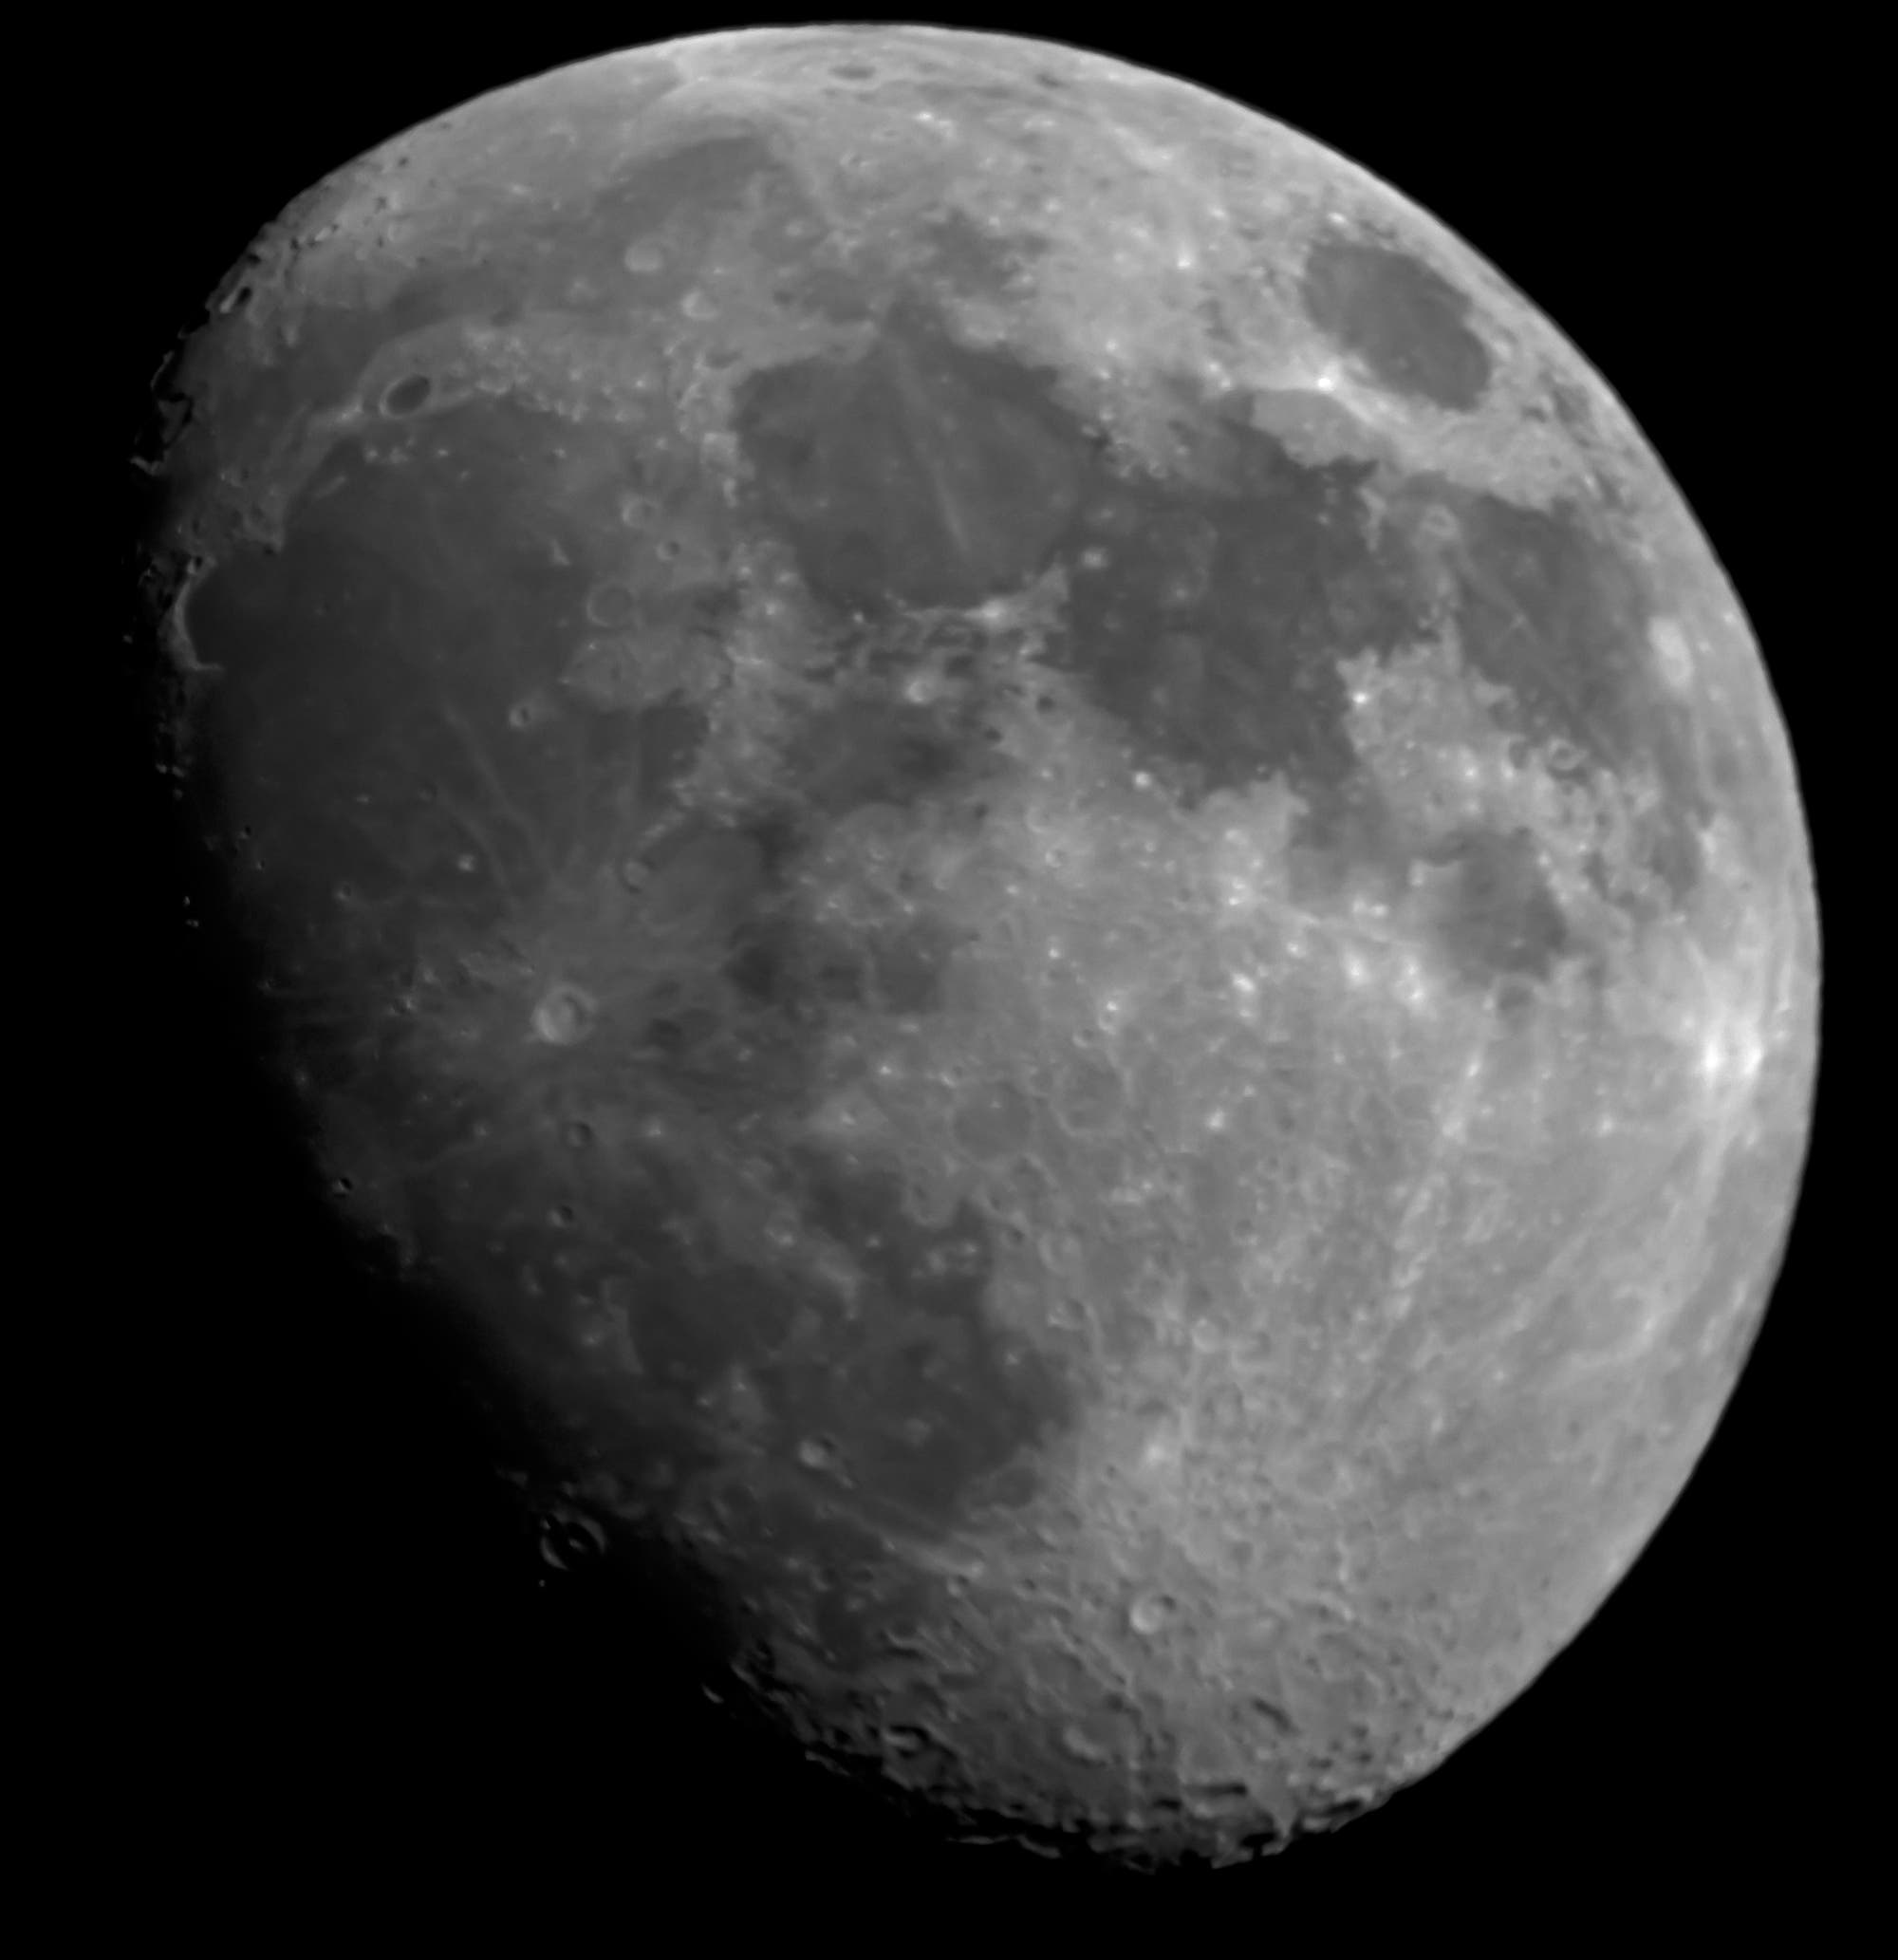 Mond - Mosaik aus 8 Aufnahmen